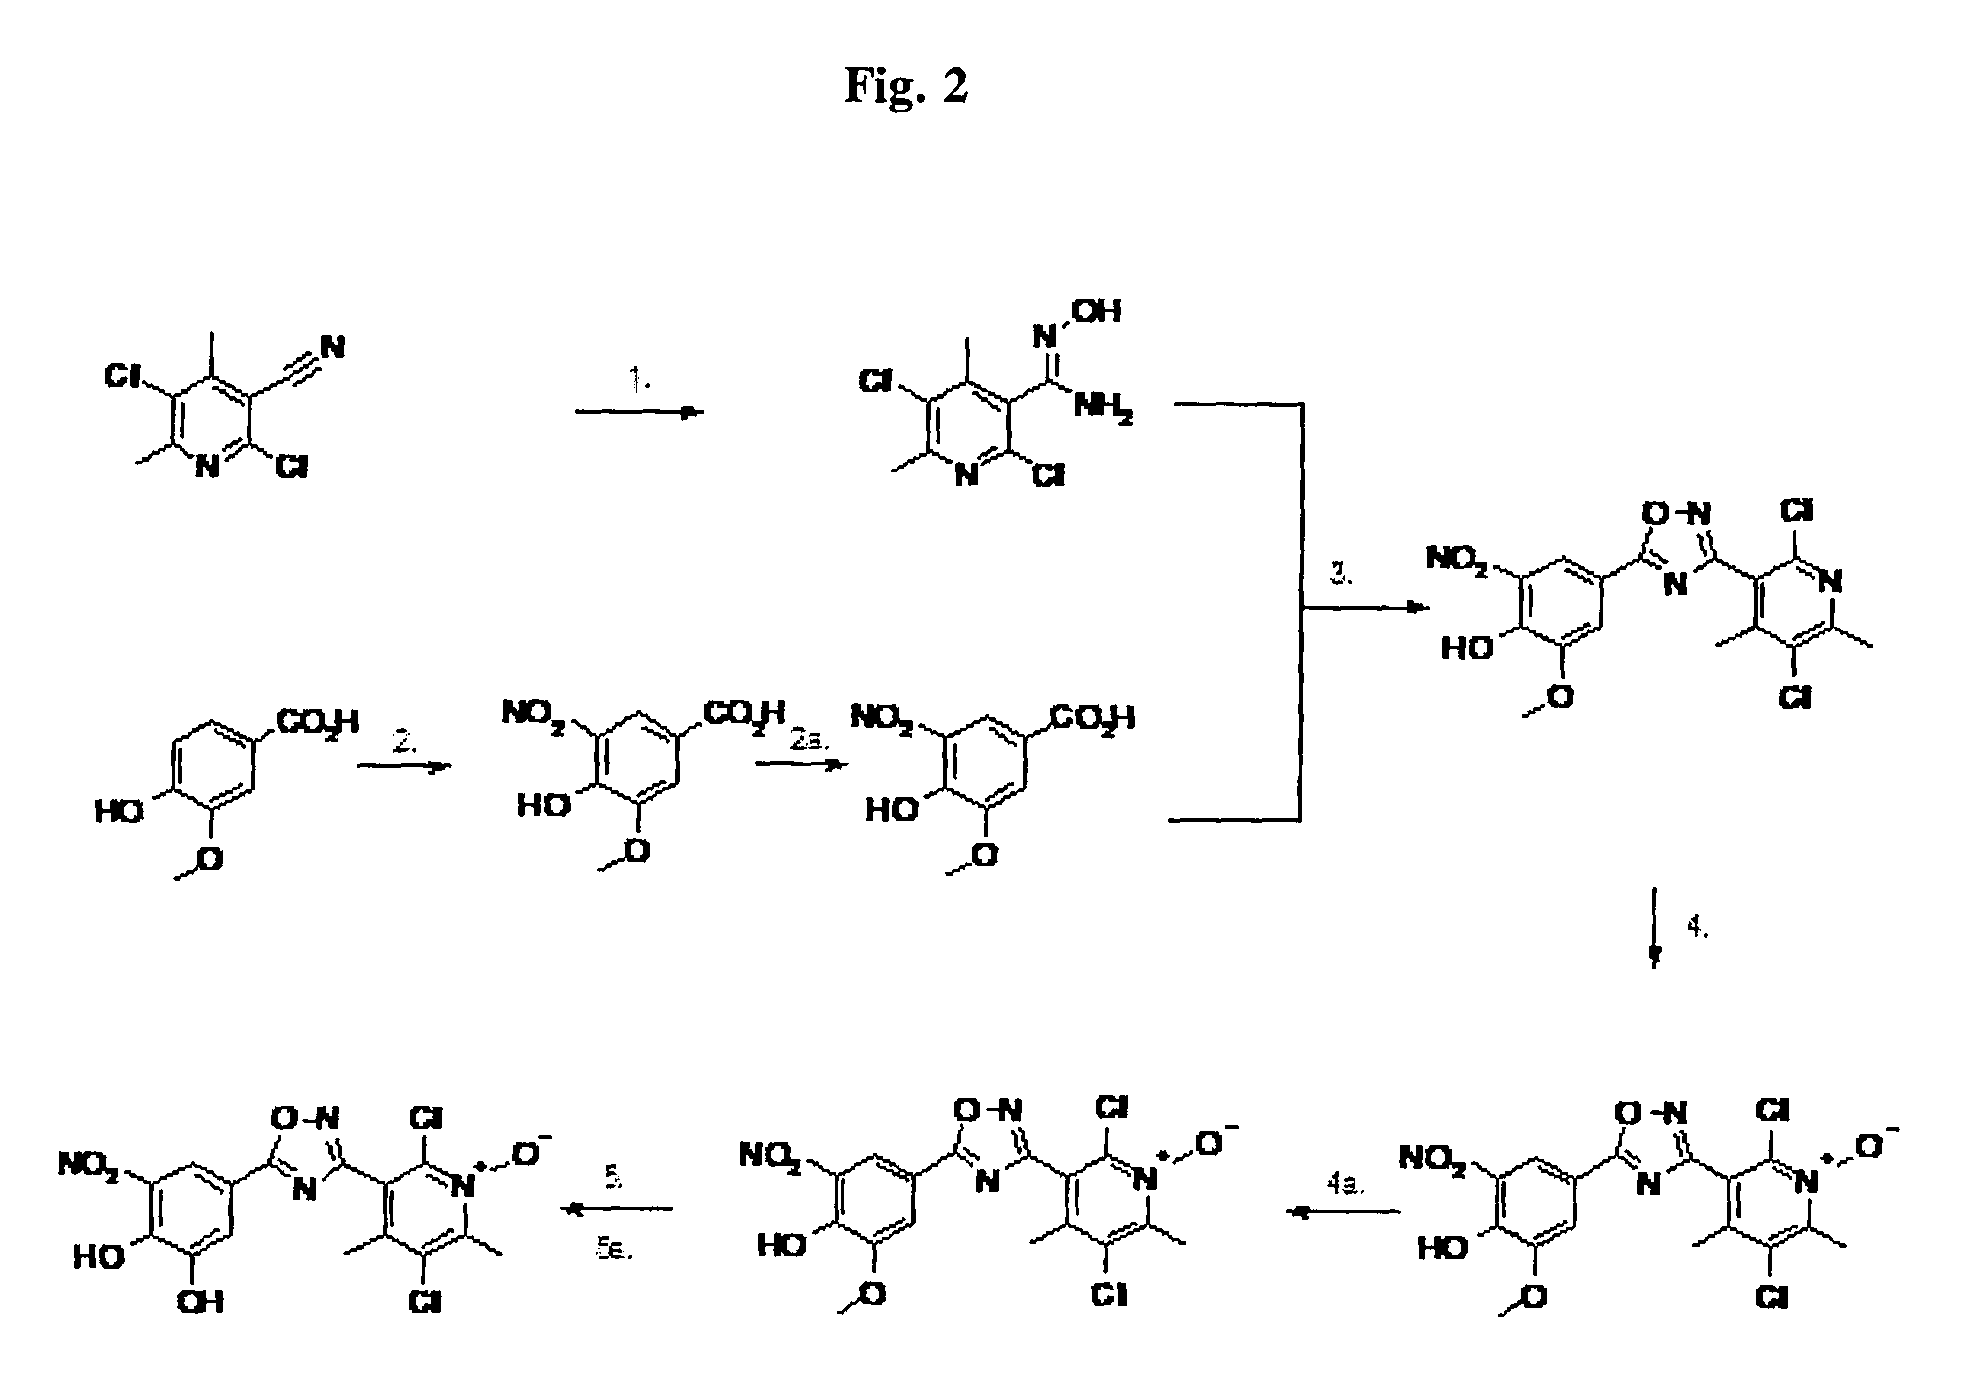 Intermediate for preparing a catechol-O-methyltransferase inhibitor